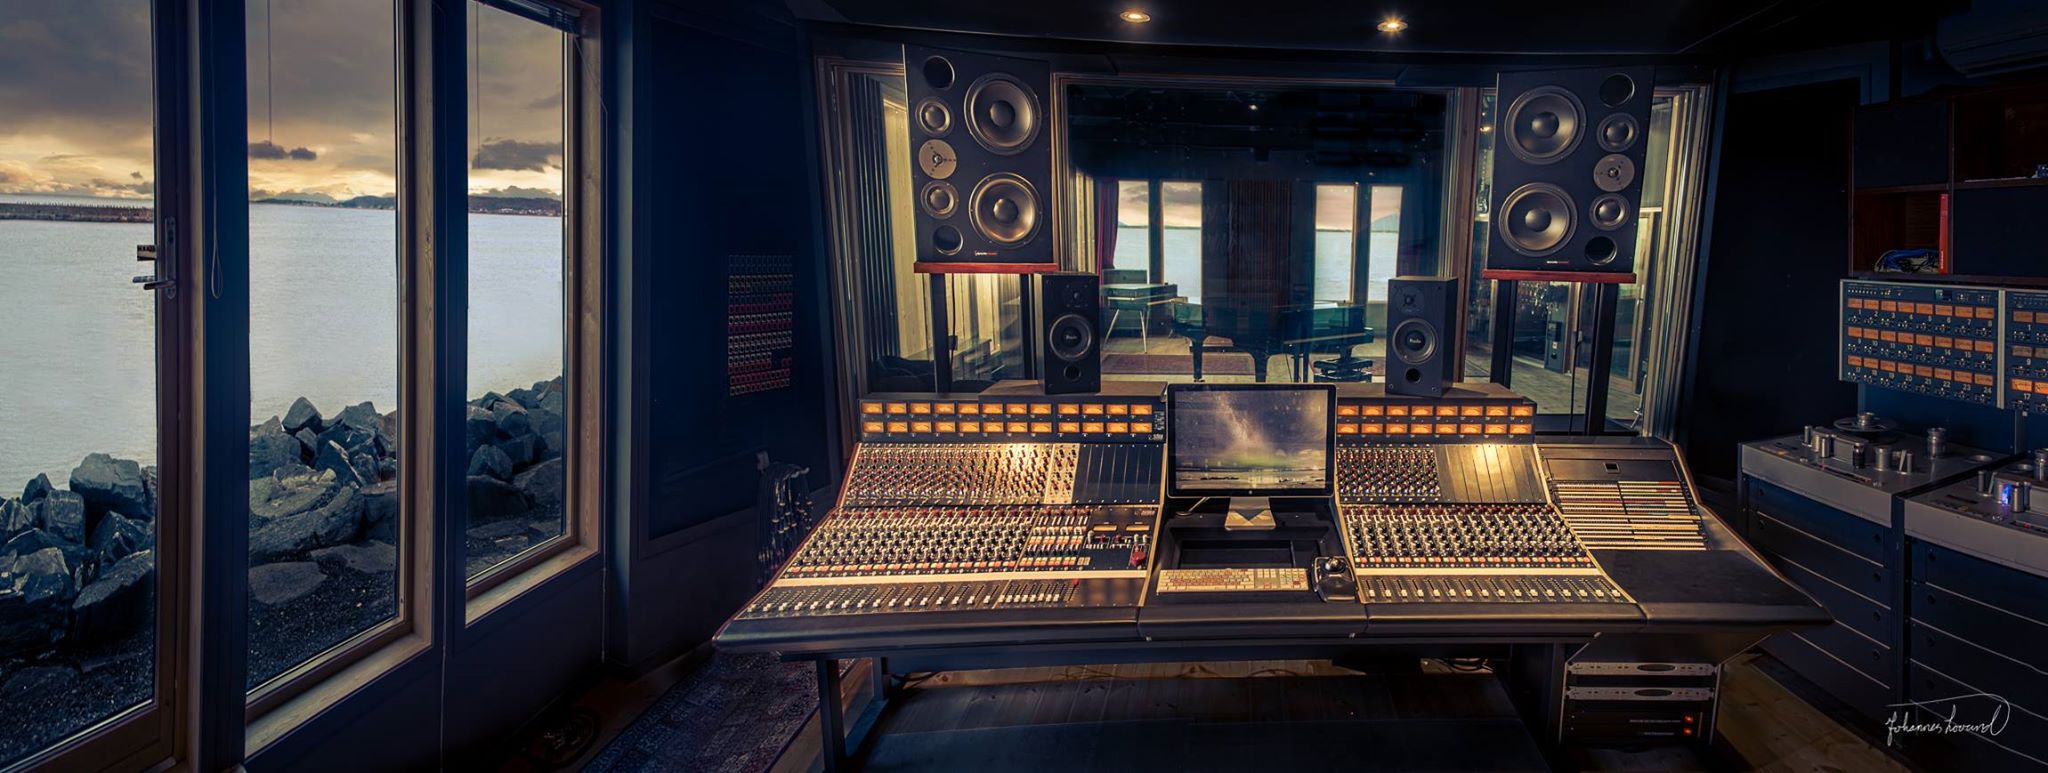 Ocean Sound Recording Studio - control desk. Image courtesy of OSR